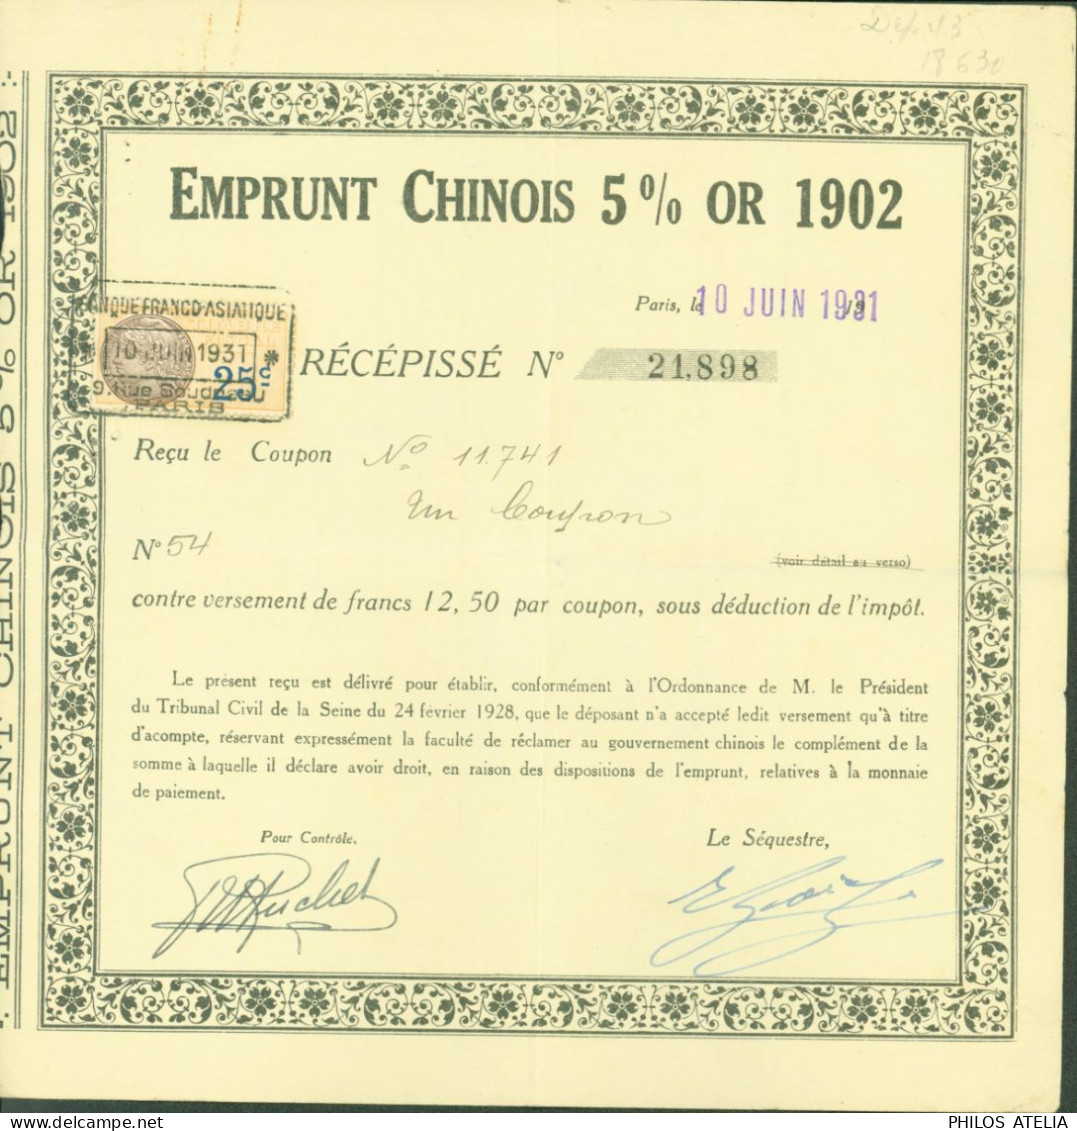 Obligation Emprunt Chinois 5% Or 1902 Paris 10 JUIN 1931 Timbre Fiscal 25ct Daucy Reçu Coupon Contre Versement - Covers & Documents